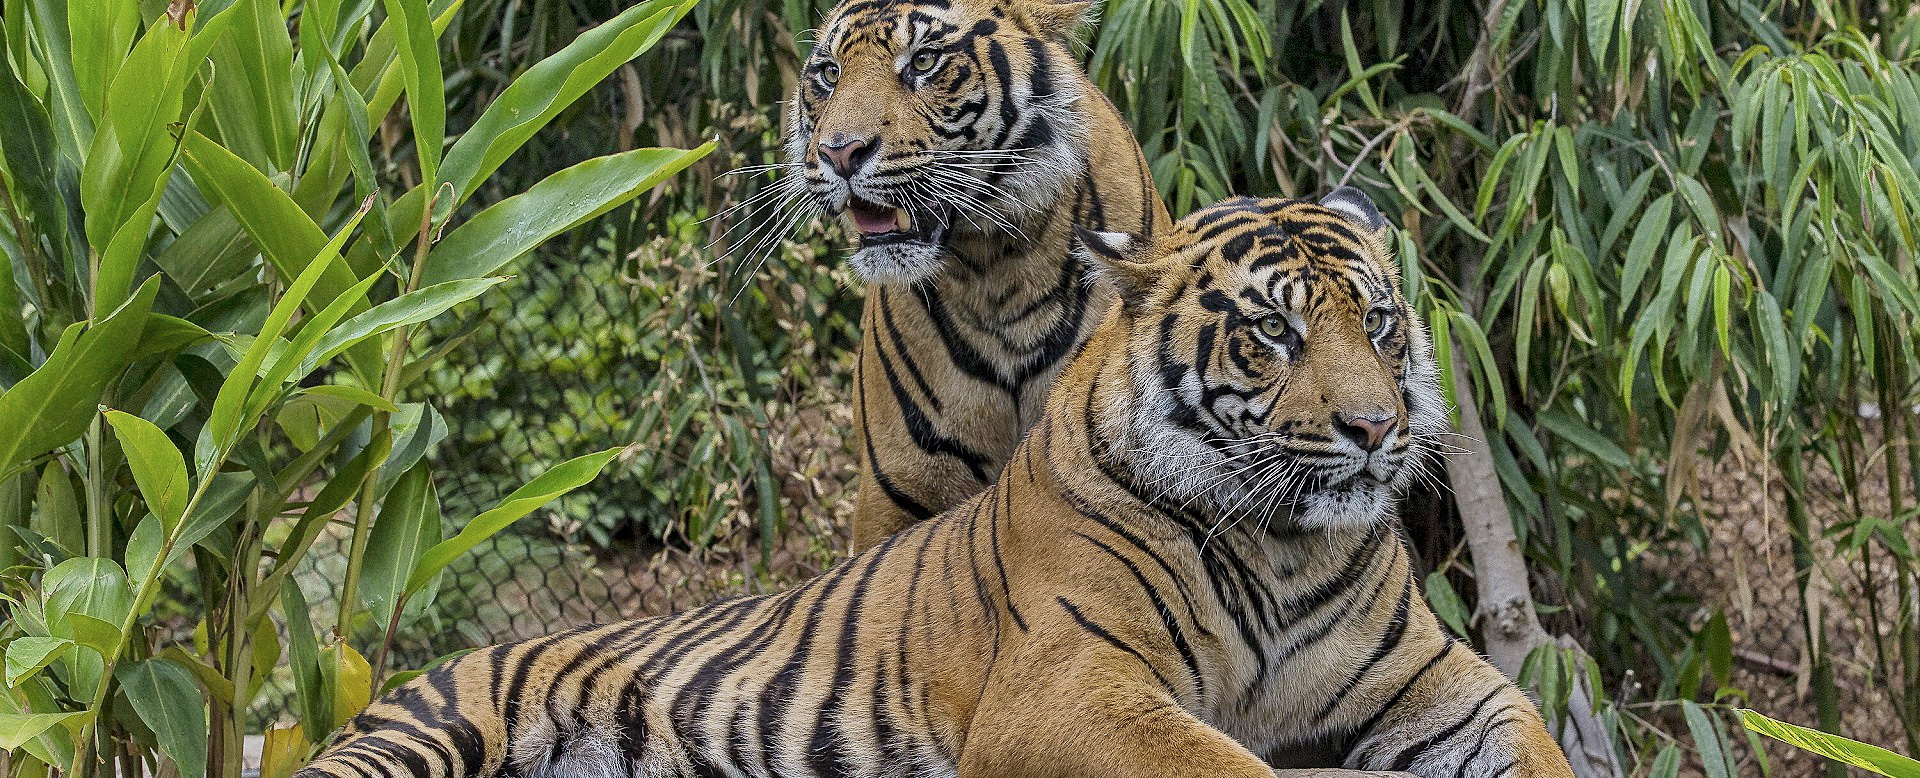 San Diego Zoo - Tigers